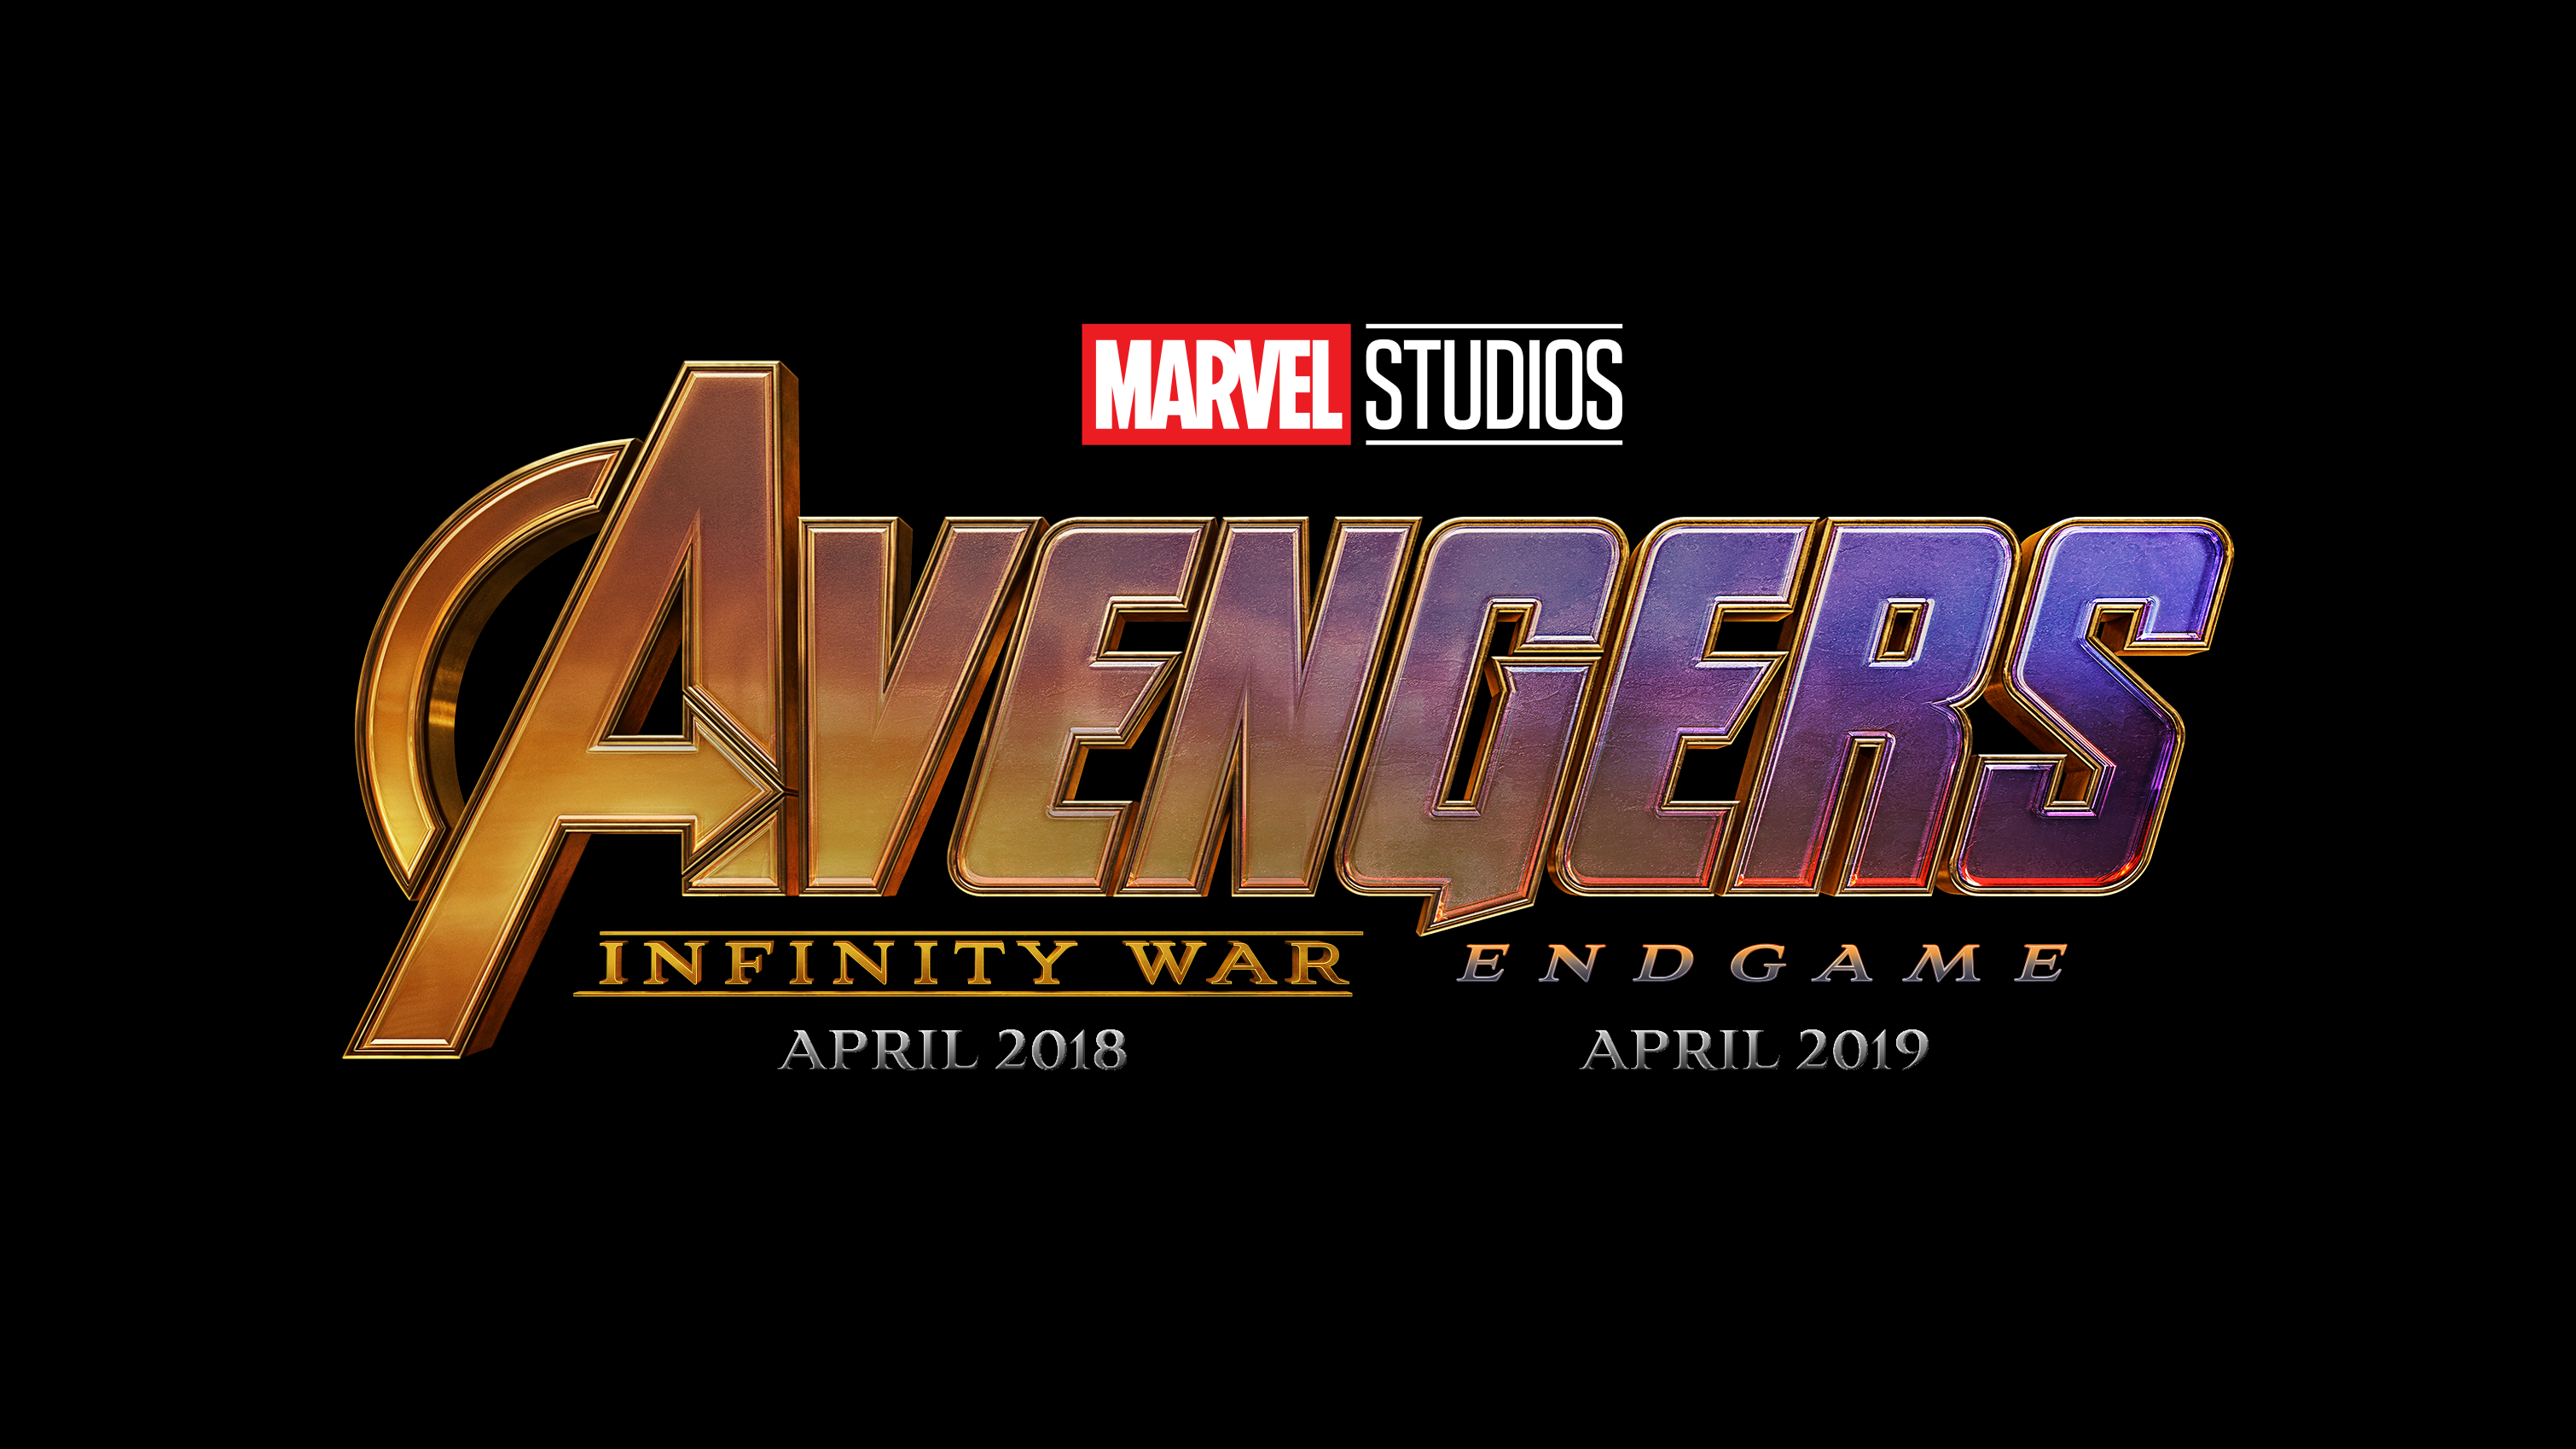 Avengers Infinity War Endgame Logo Wallpaper By Matthamman99 On Deviantart